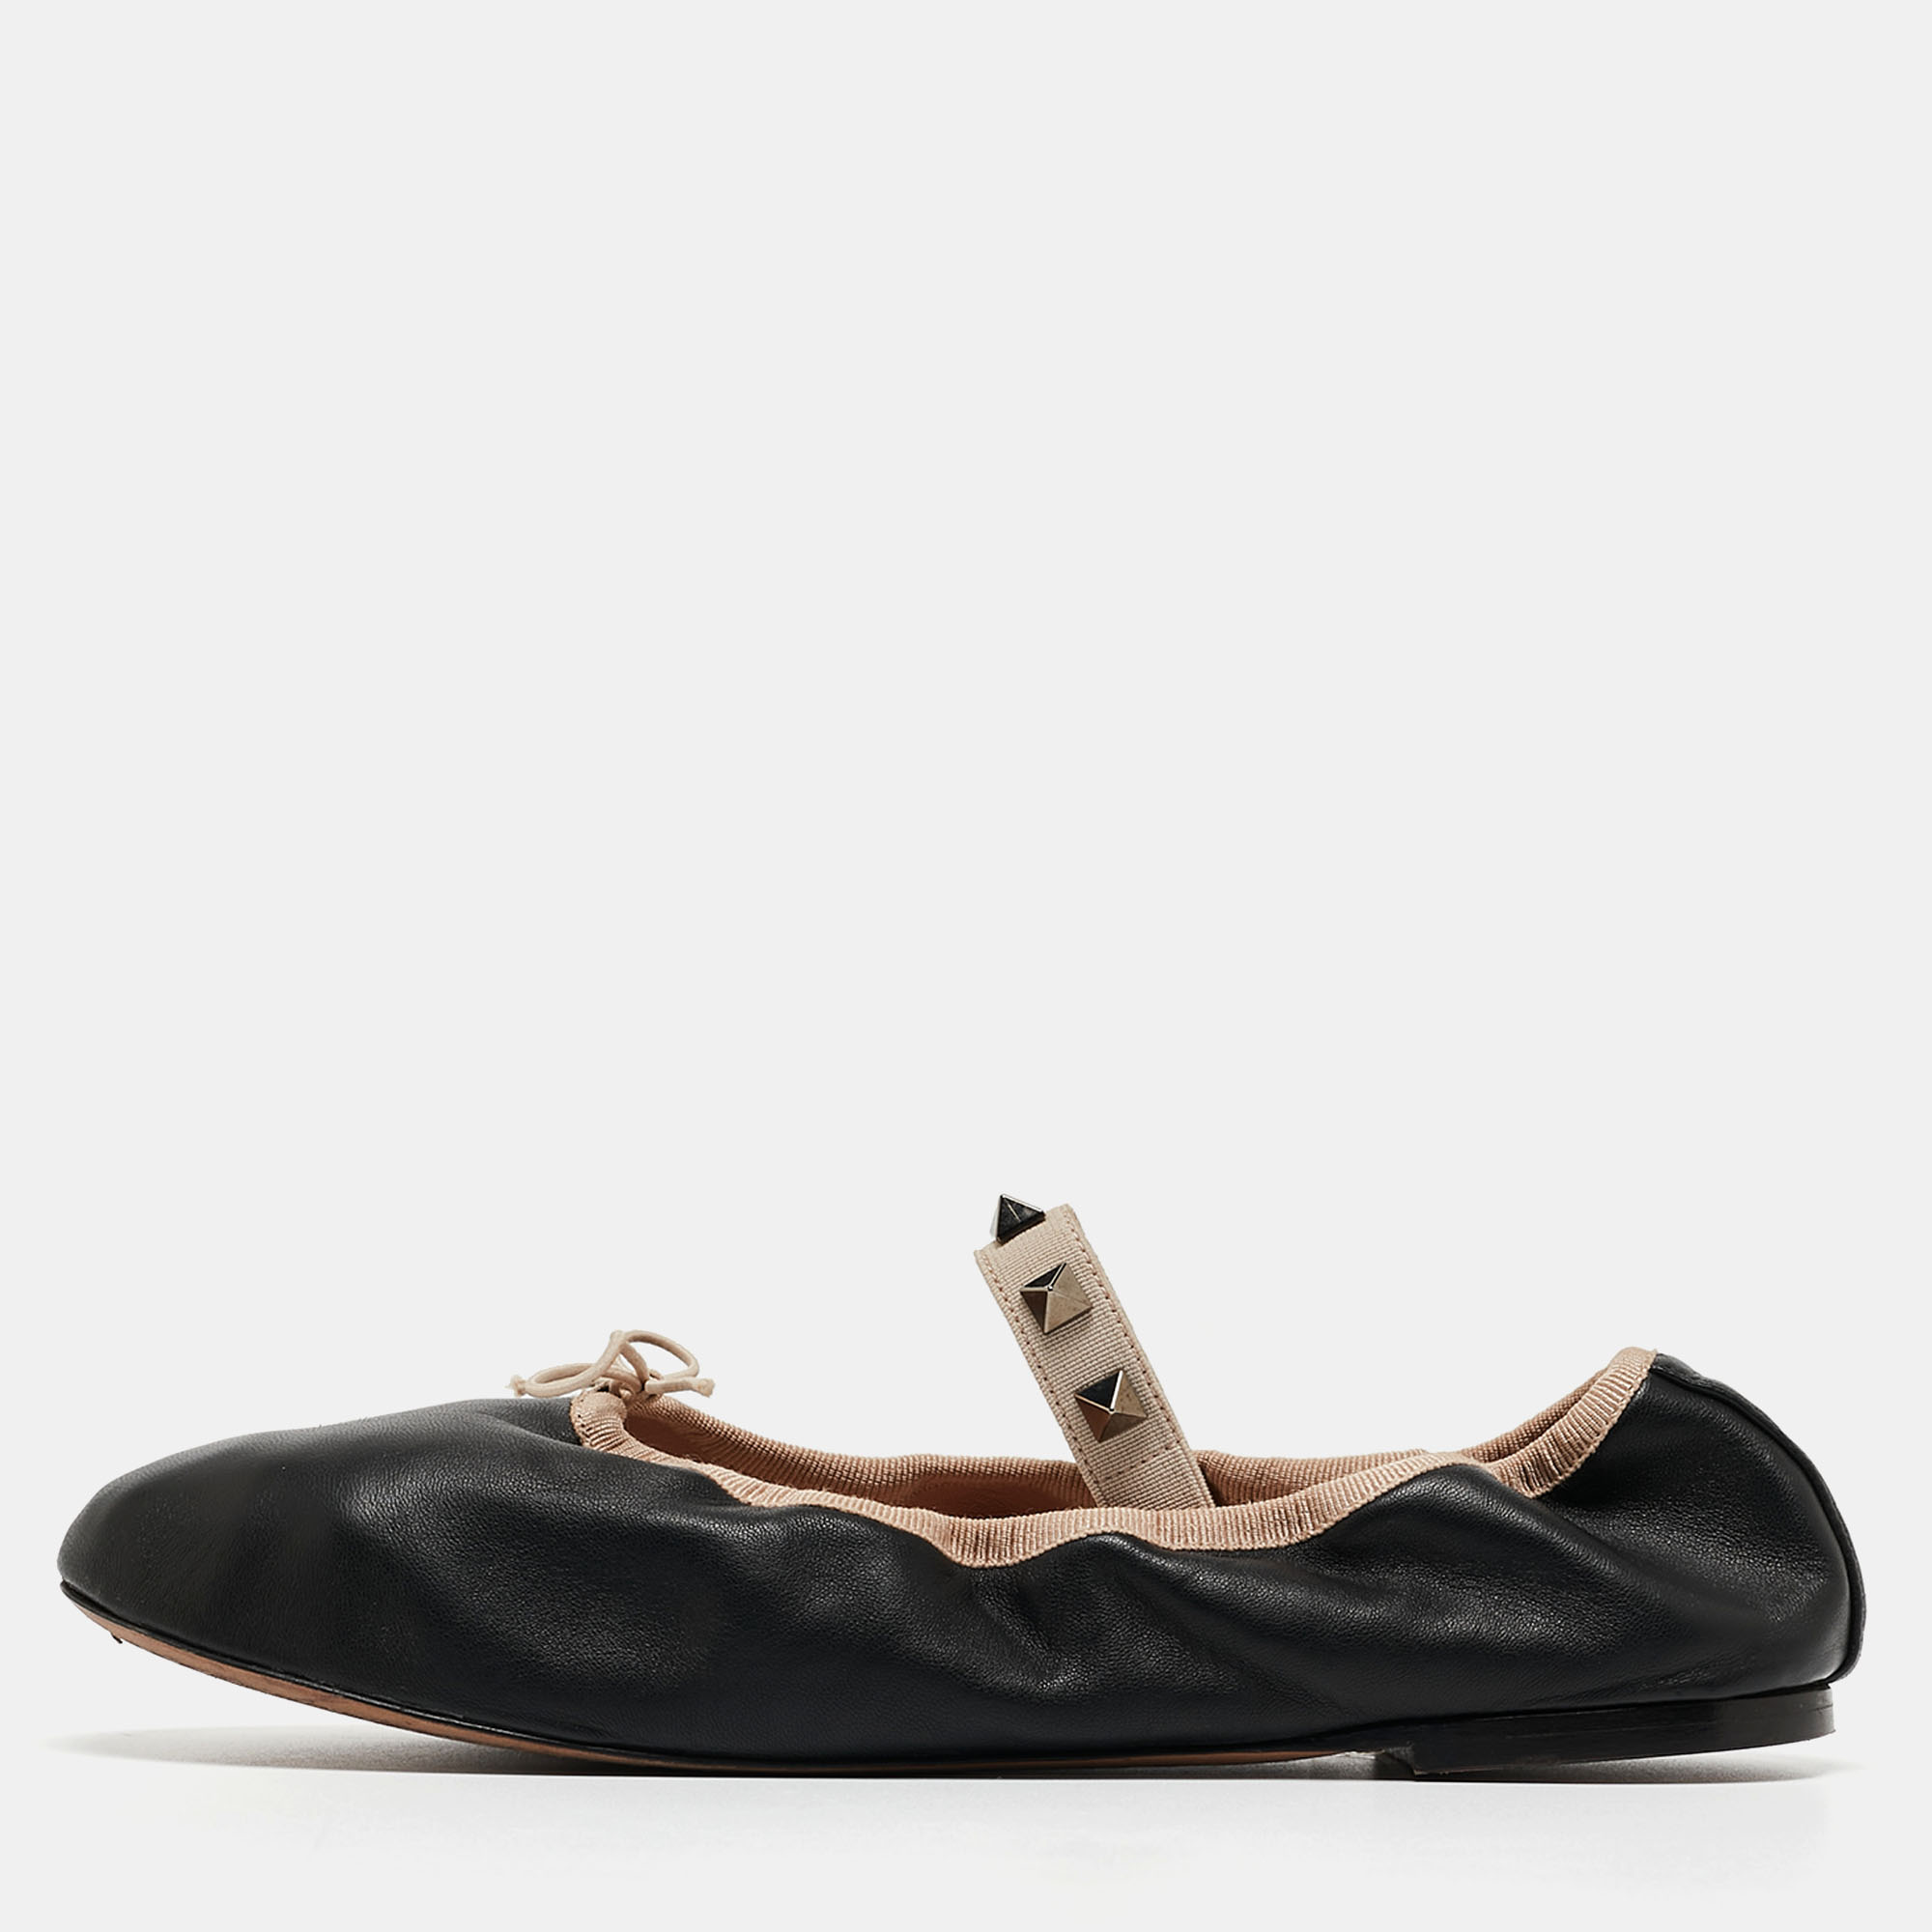 Valentino Black Leather Rockstud Mary Jane Bow Ballet Flats Size 38.5